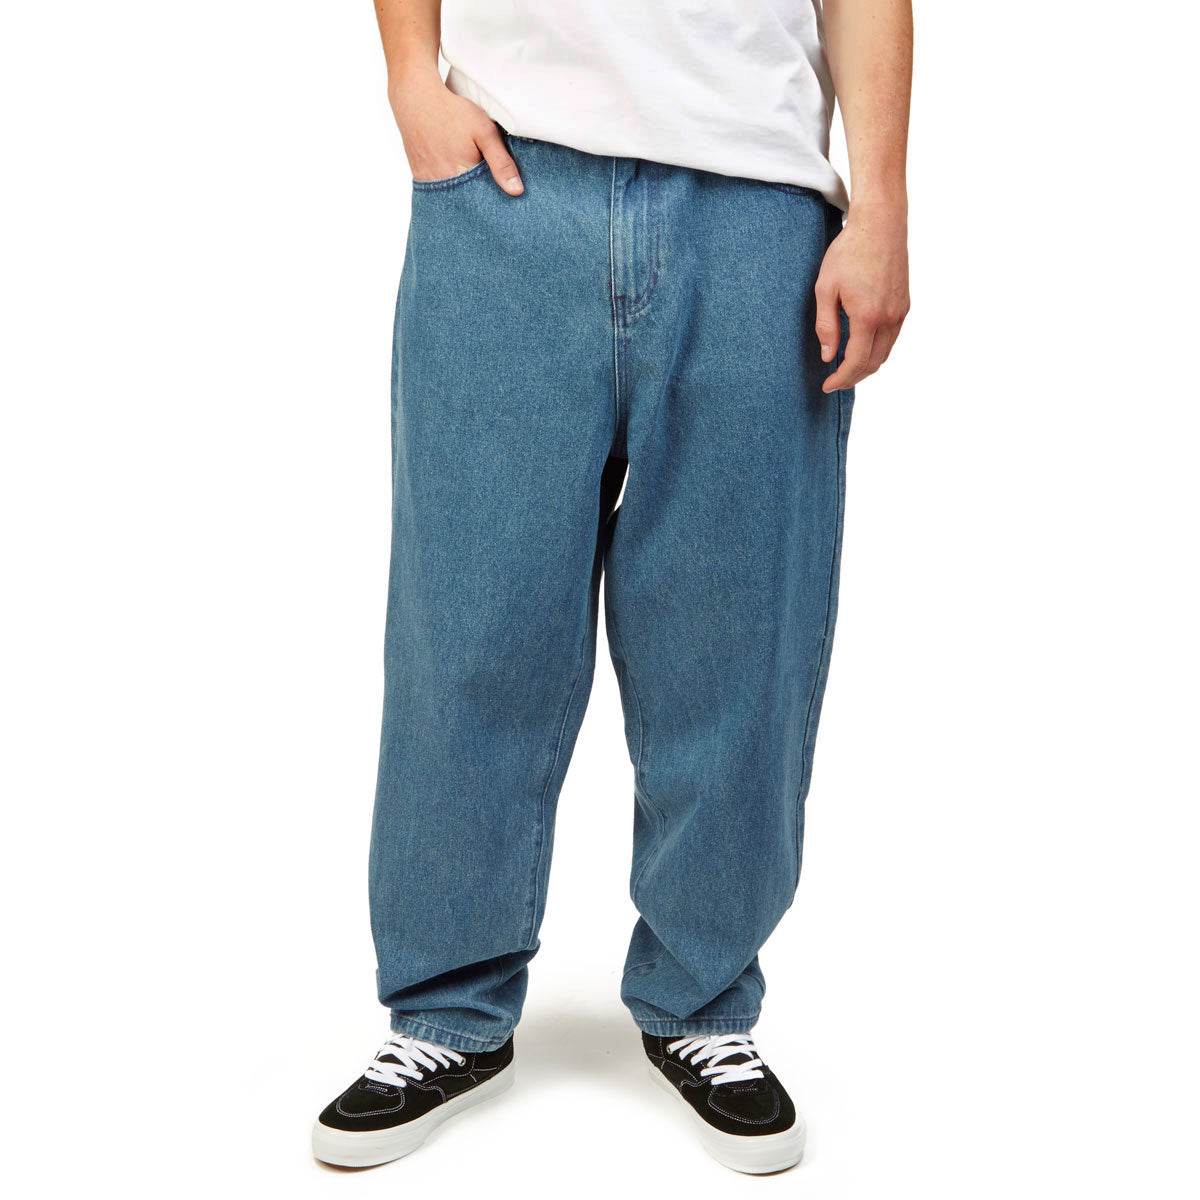 CCS Baggy Taper Denim Jeans - Medium Wash image 1